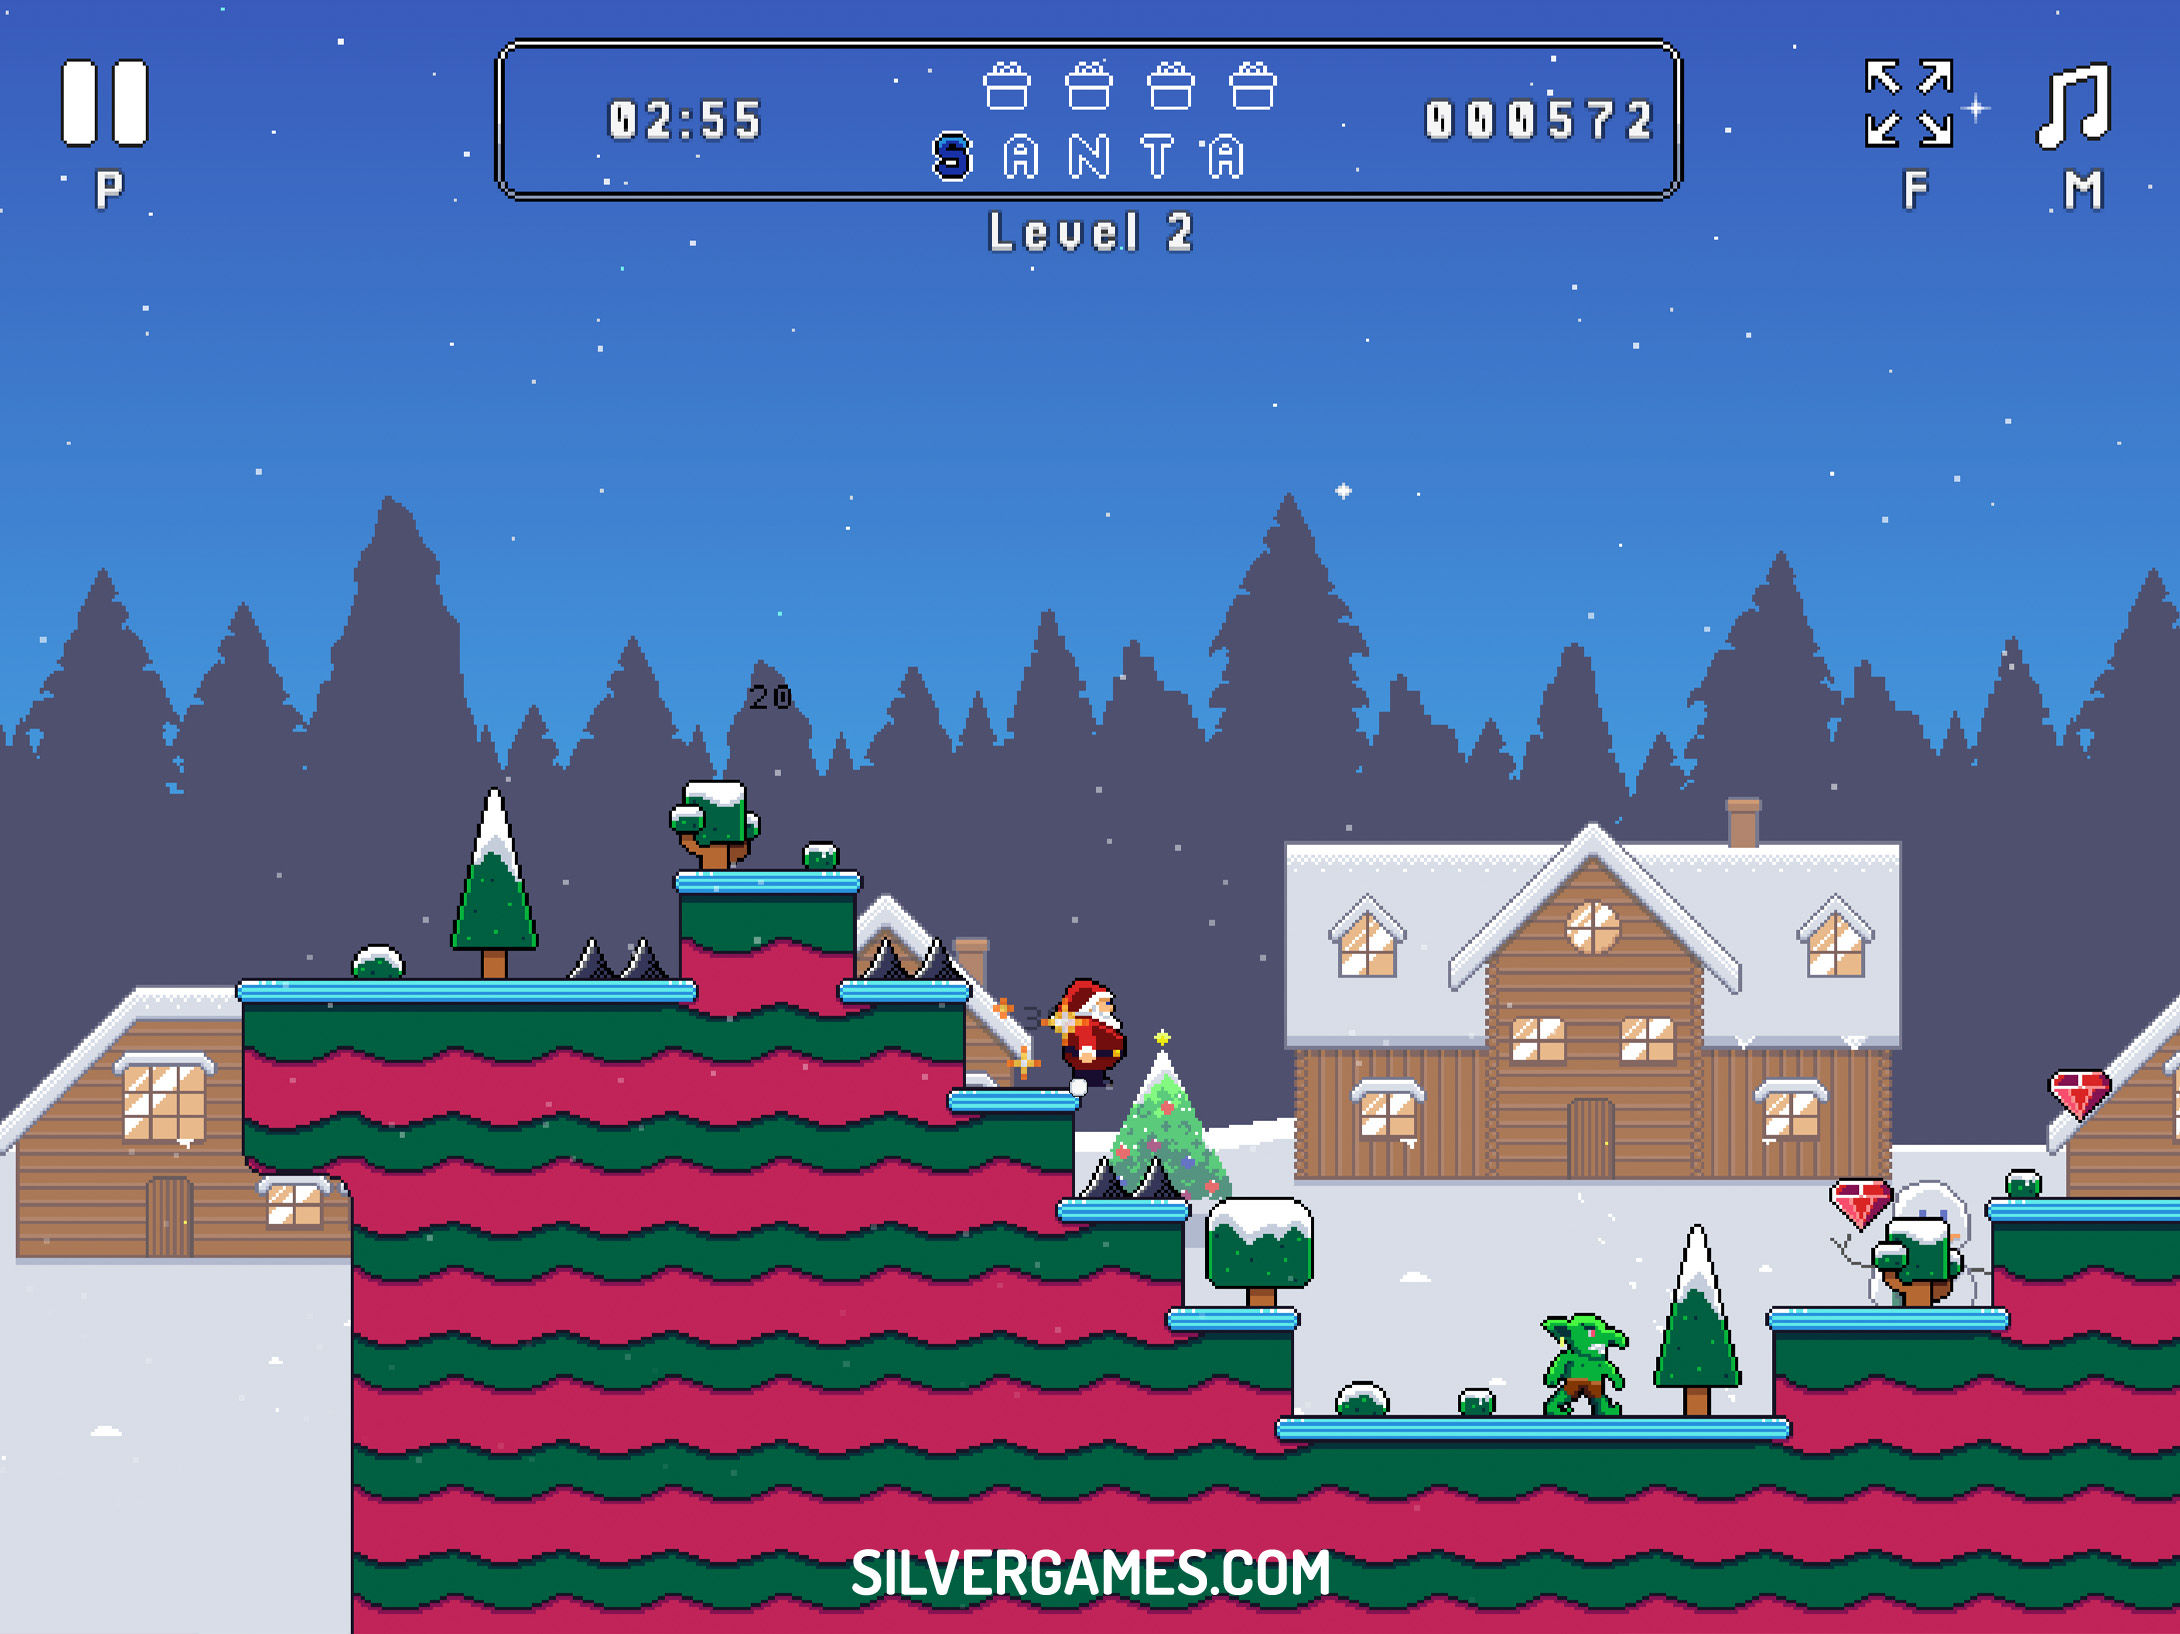 Santa Claus Adventure 2 Jogue Agora Online Gratuitamente Y8.com